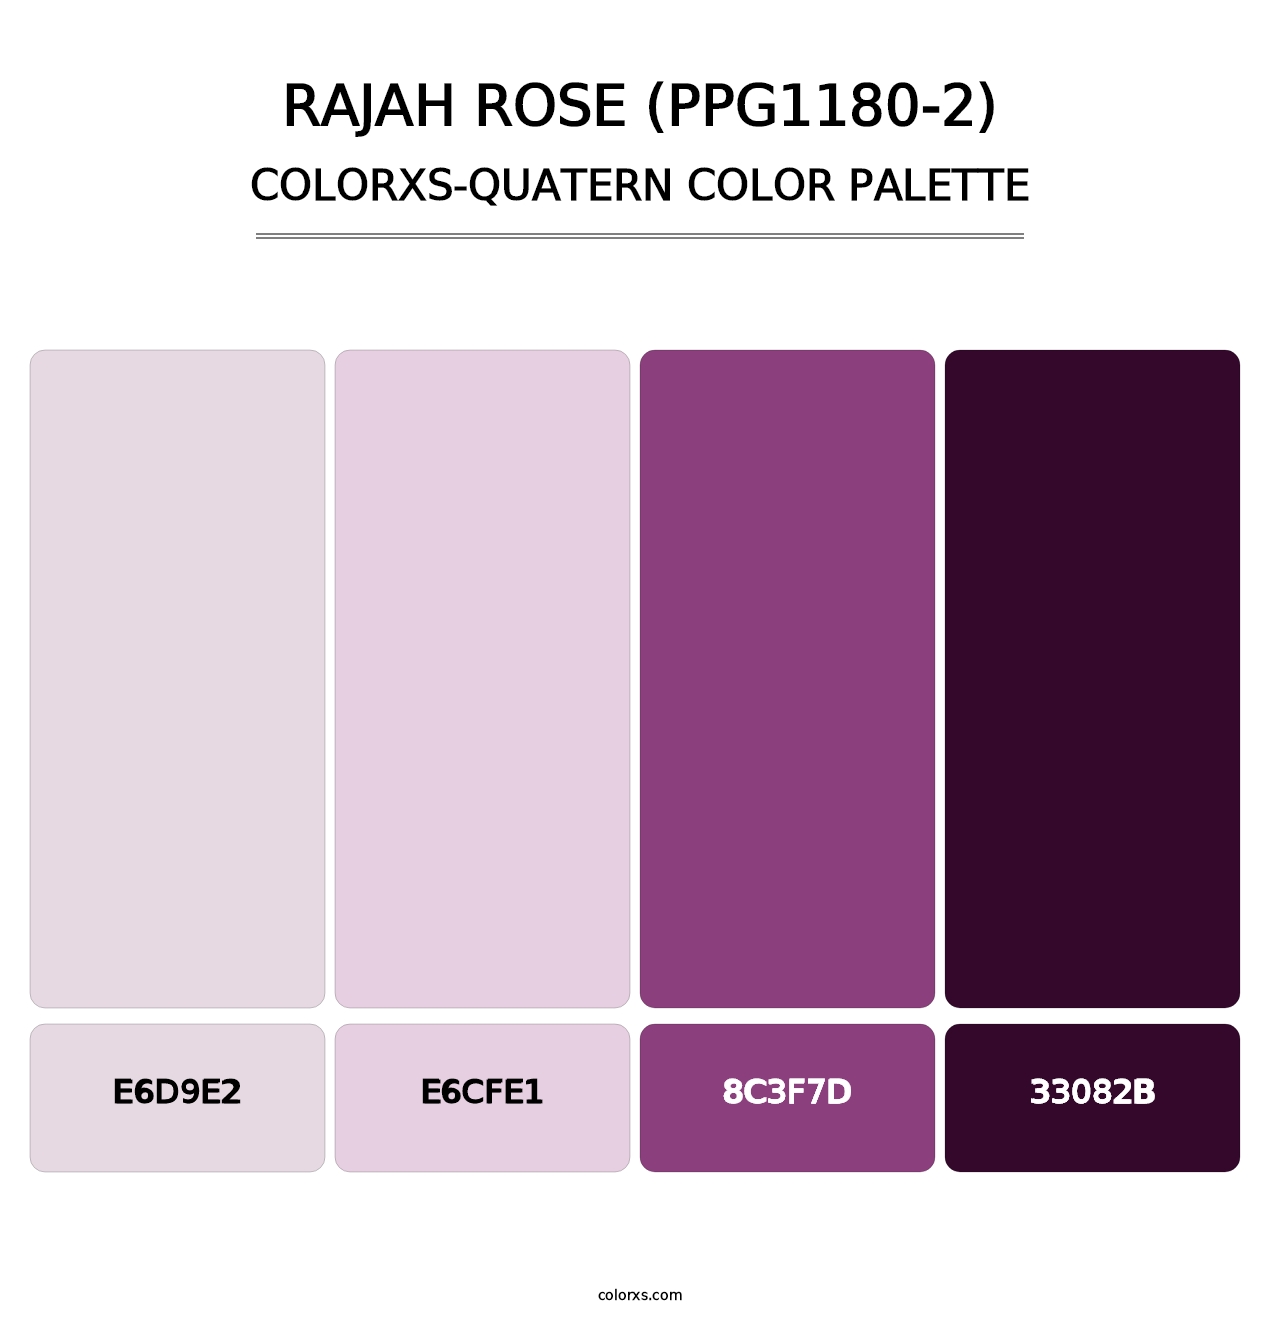 Rajah Rose (PPG1180-2) - Colorxs Quatern Palette